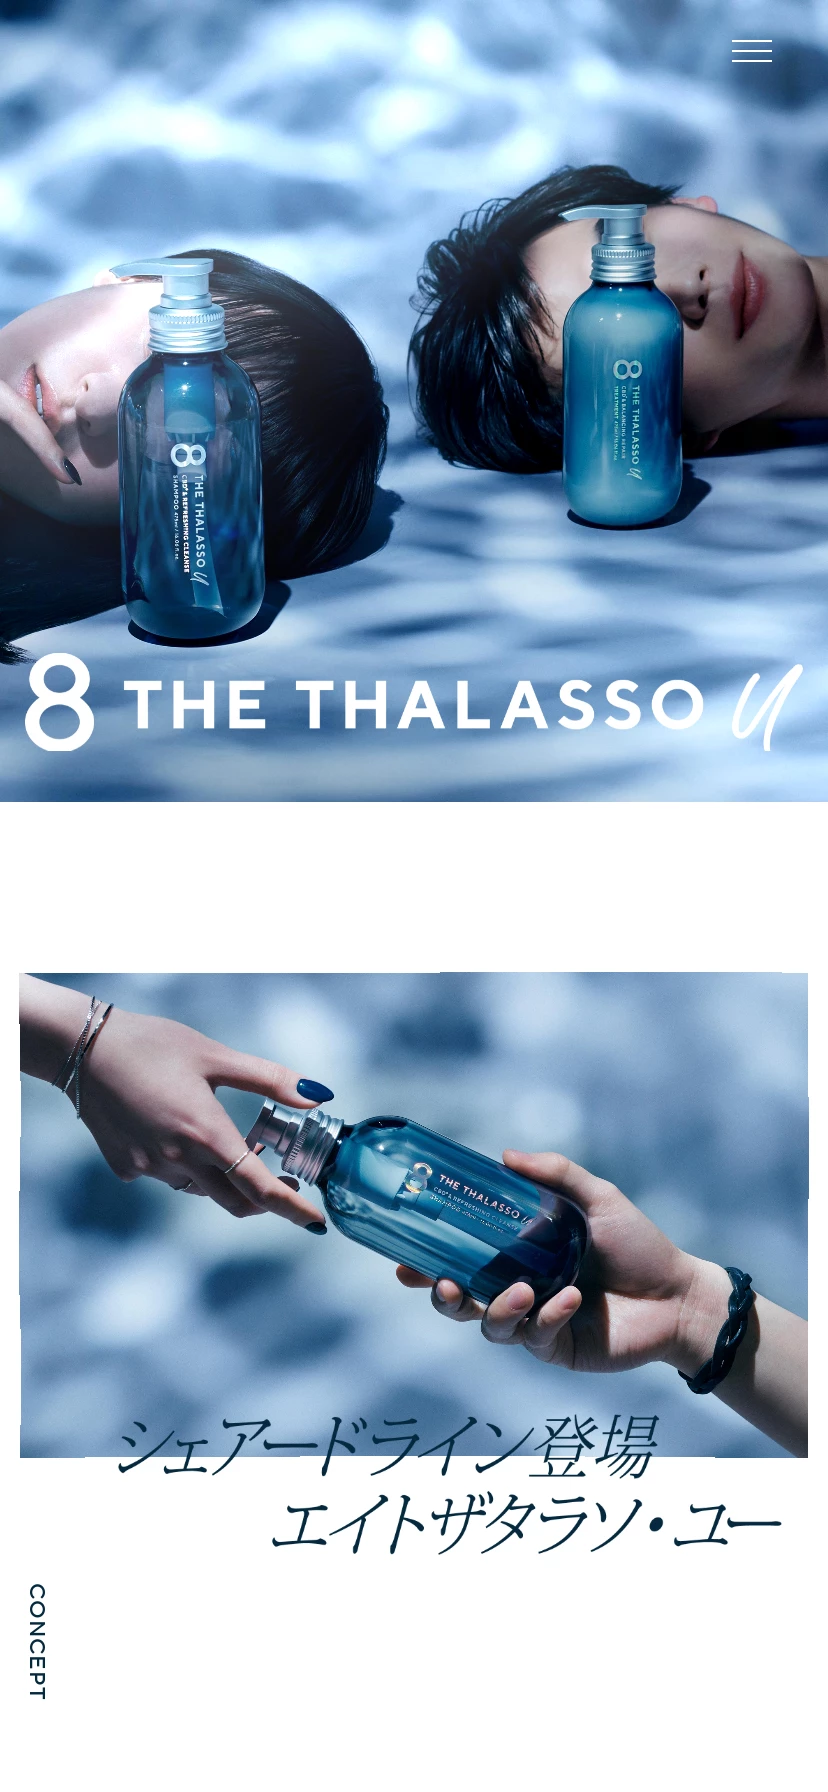 8 THE THALASSO u